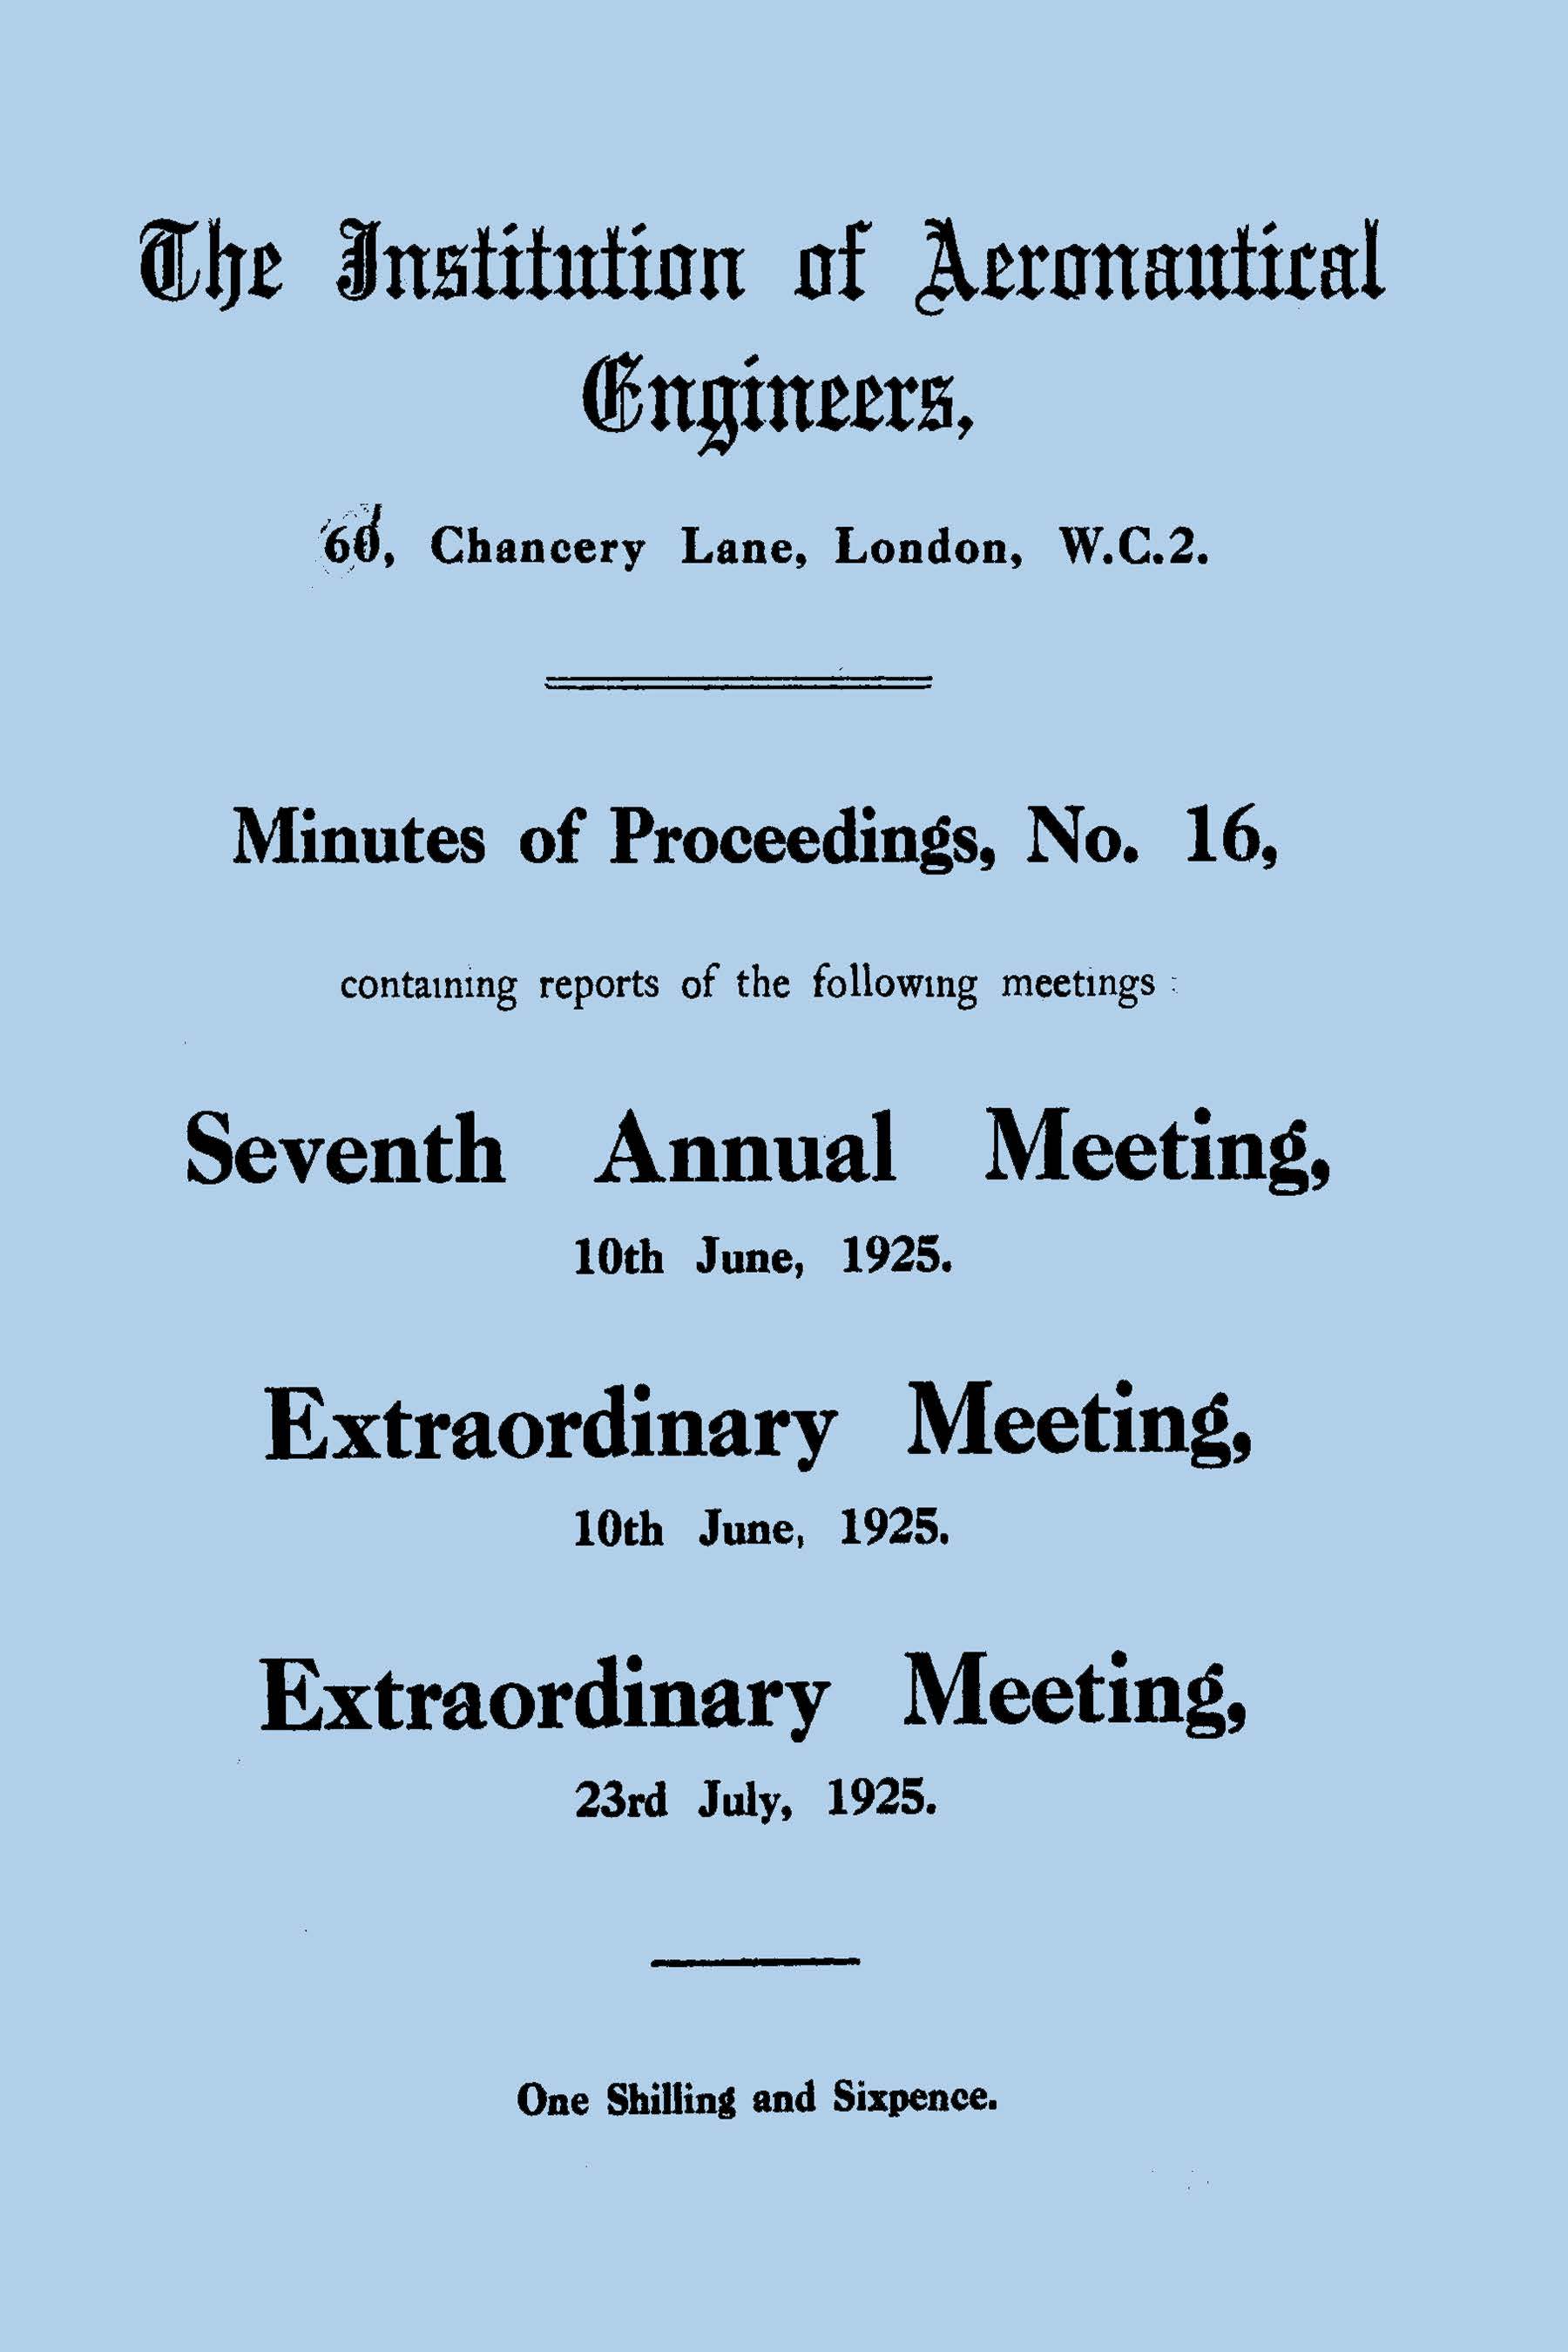 Minutes of Proceedings (Institution of Aeronautical Engineers)